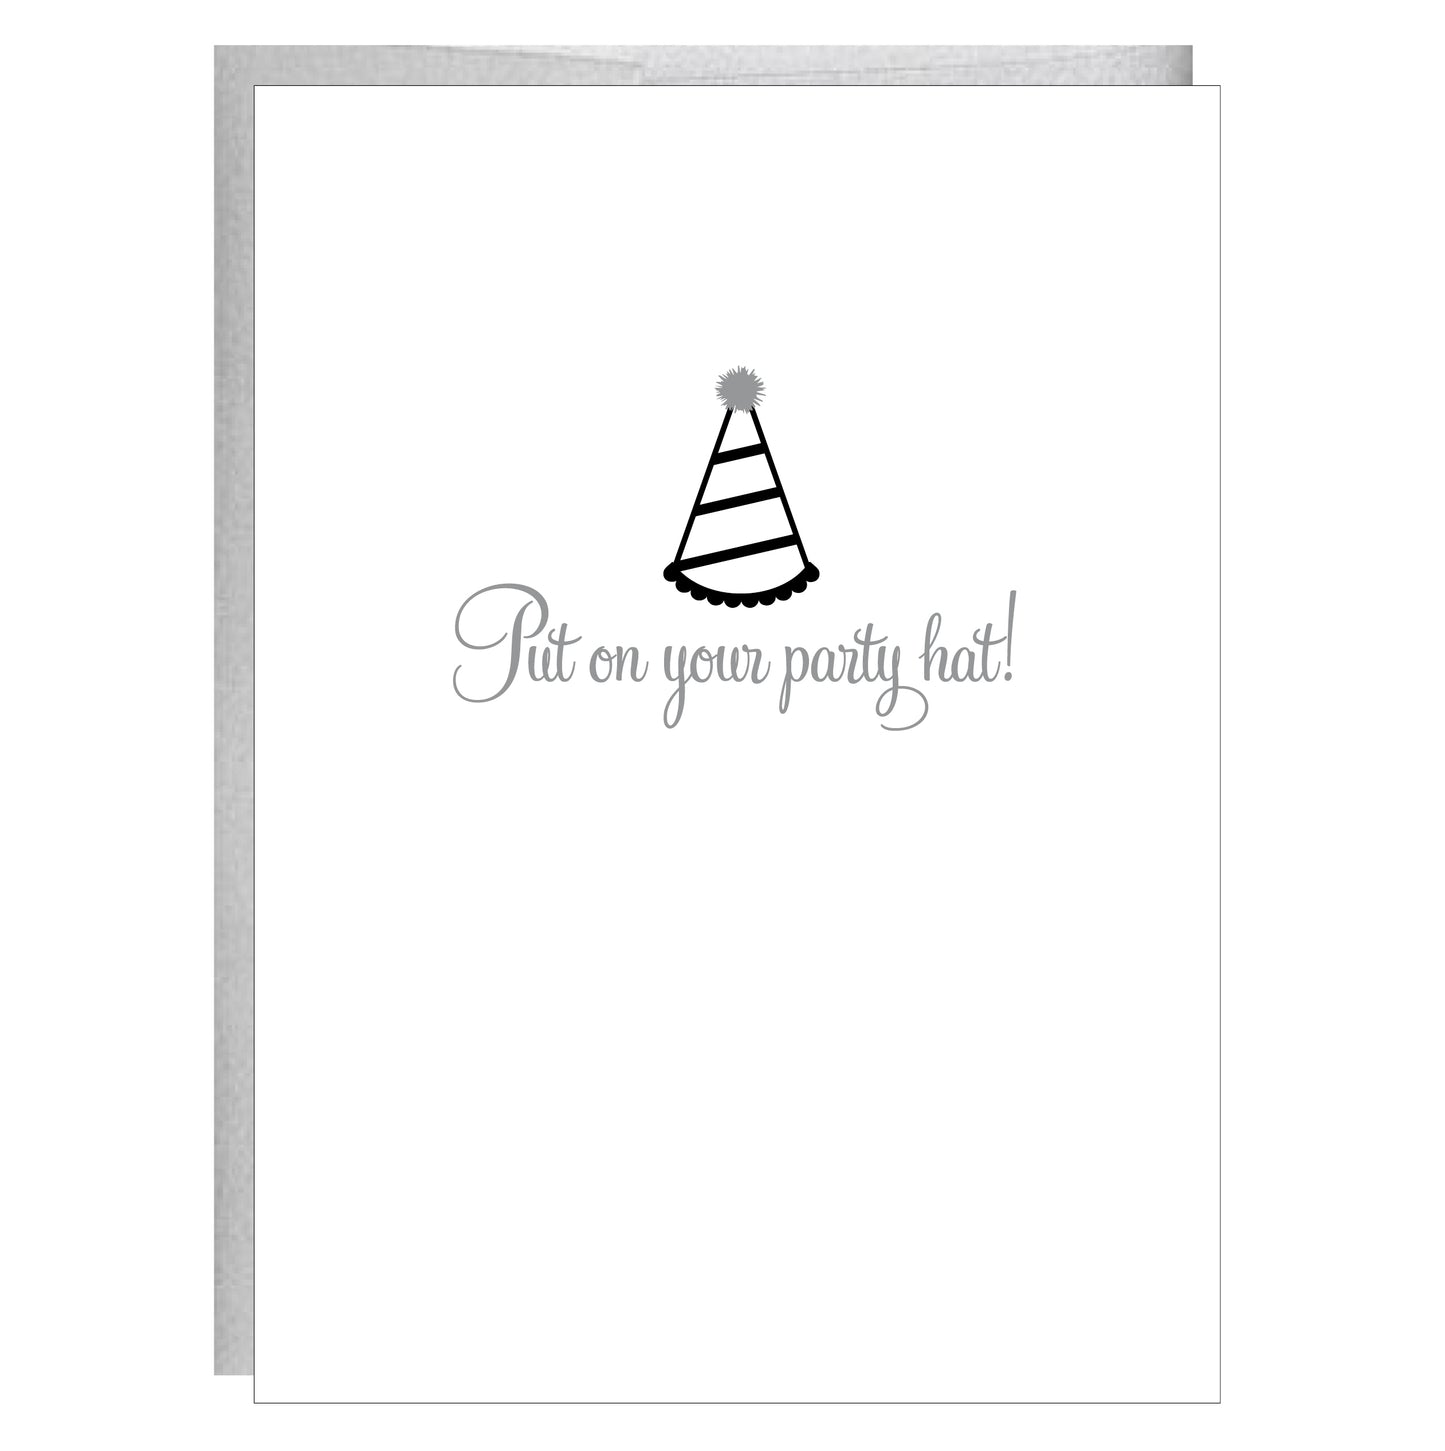 Put on Your Party Hat Letterpress Greeting Card - Idea Chíc